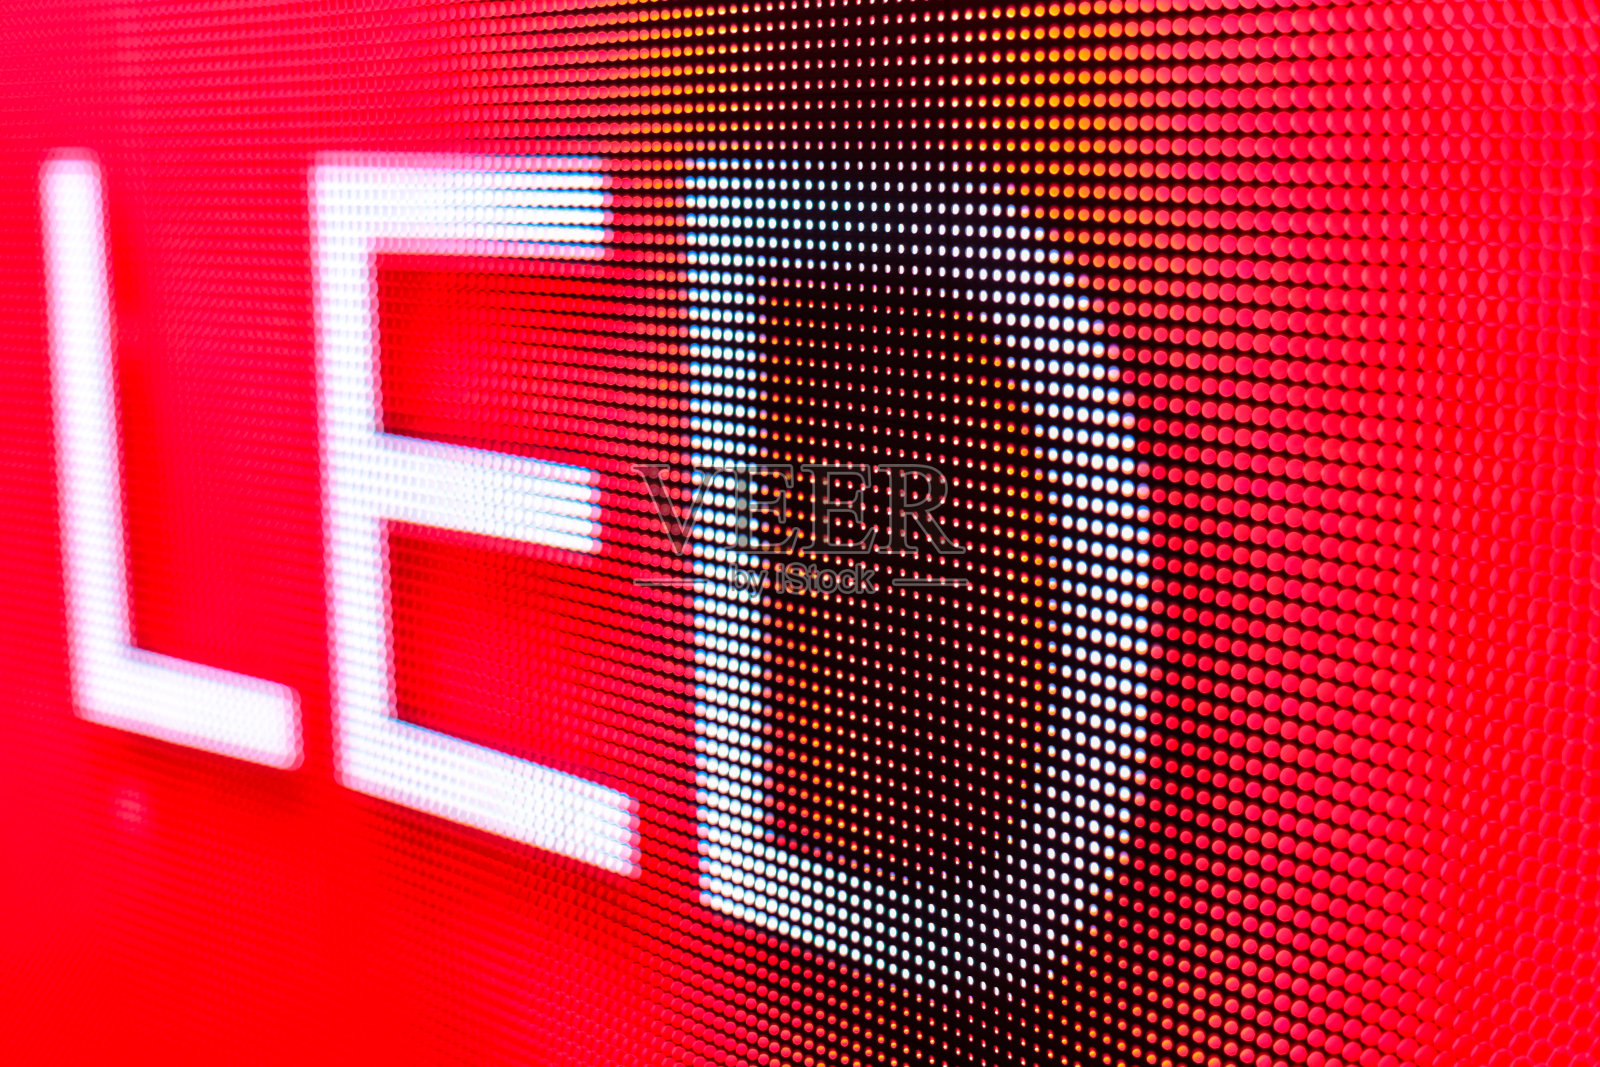 LED smd屏幕上的红色LED标识照片摄影图片